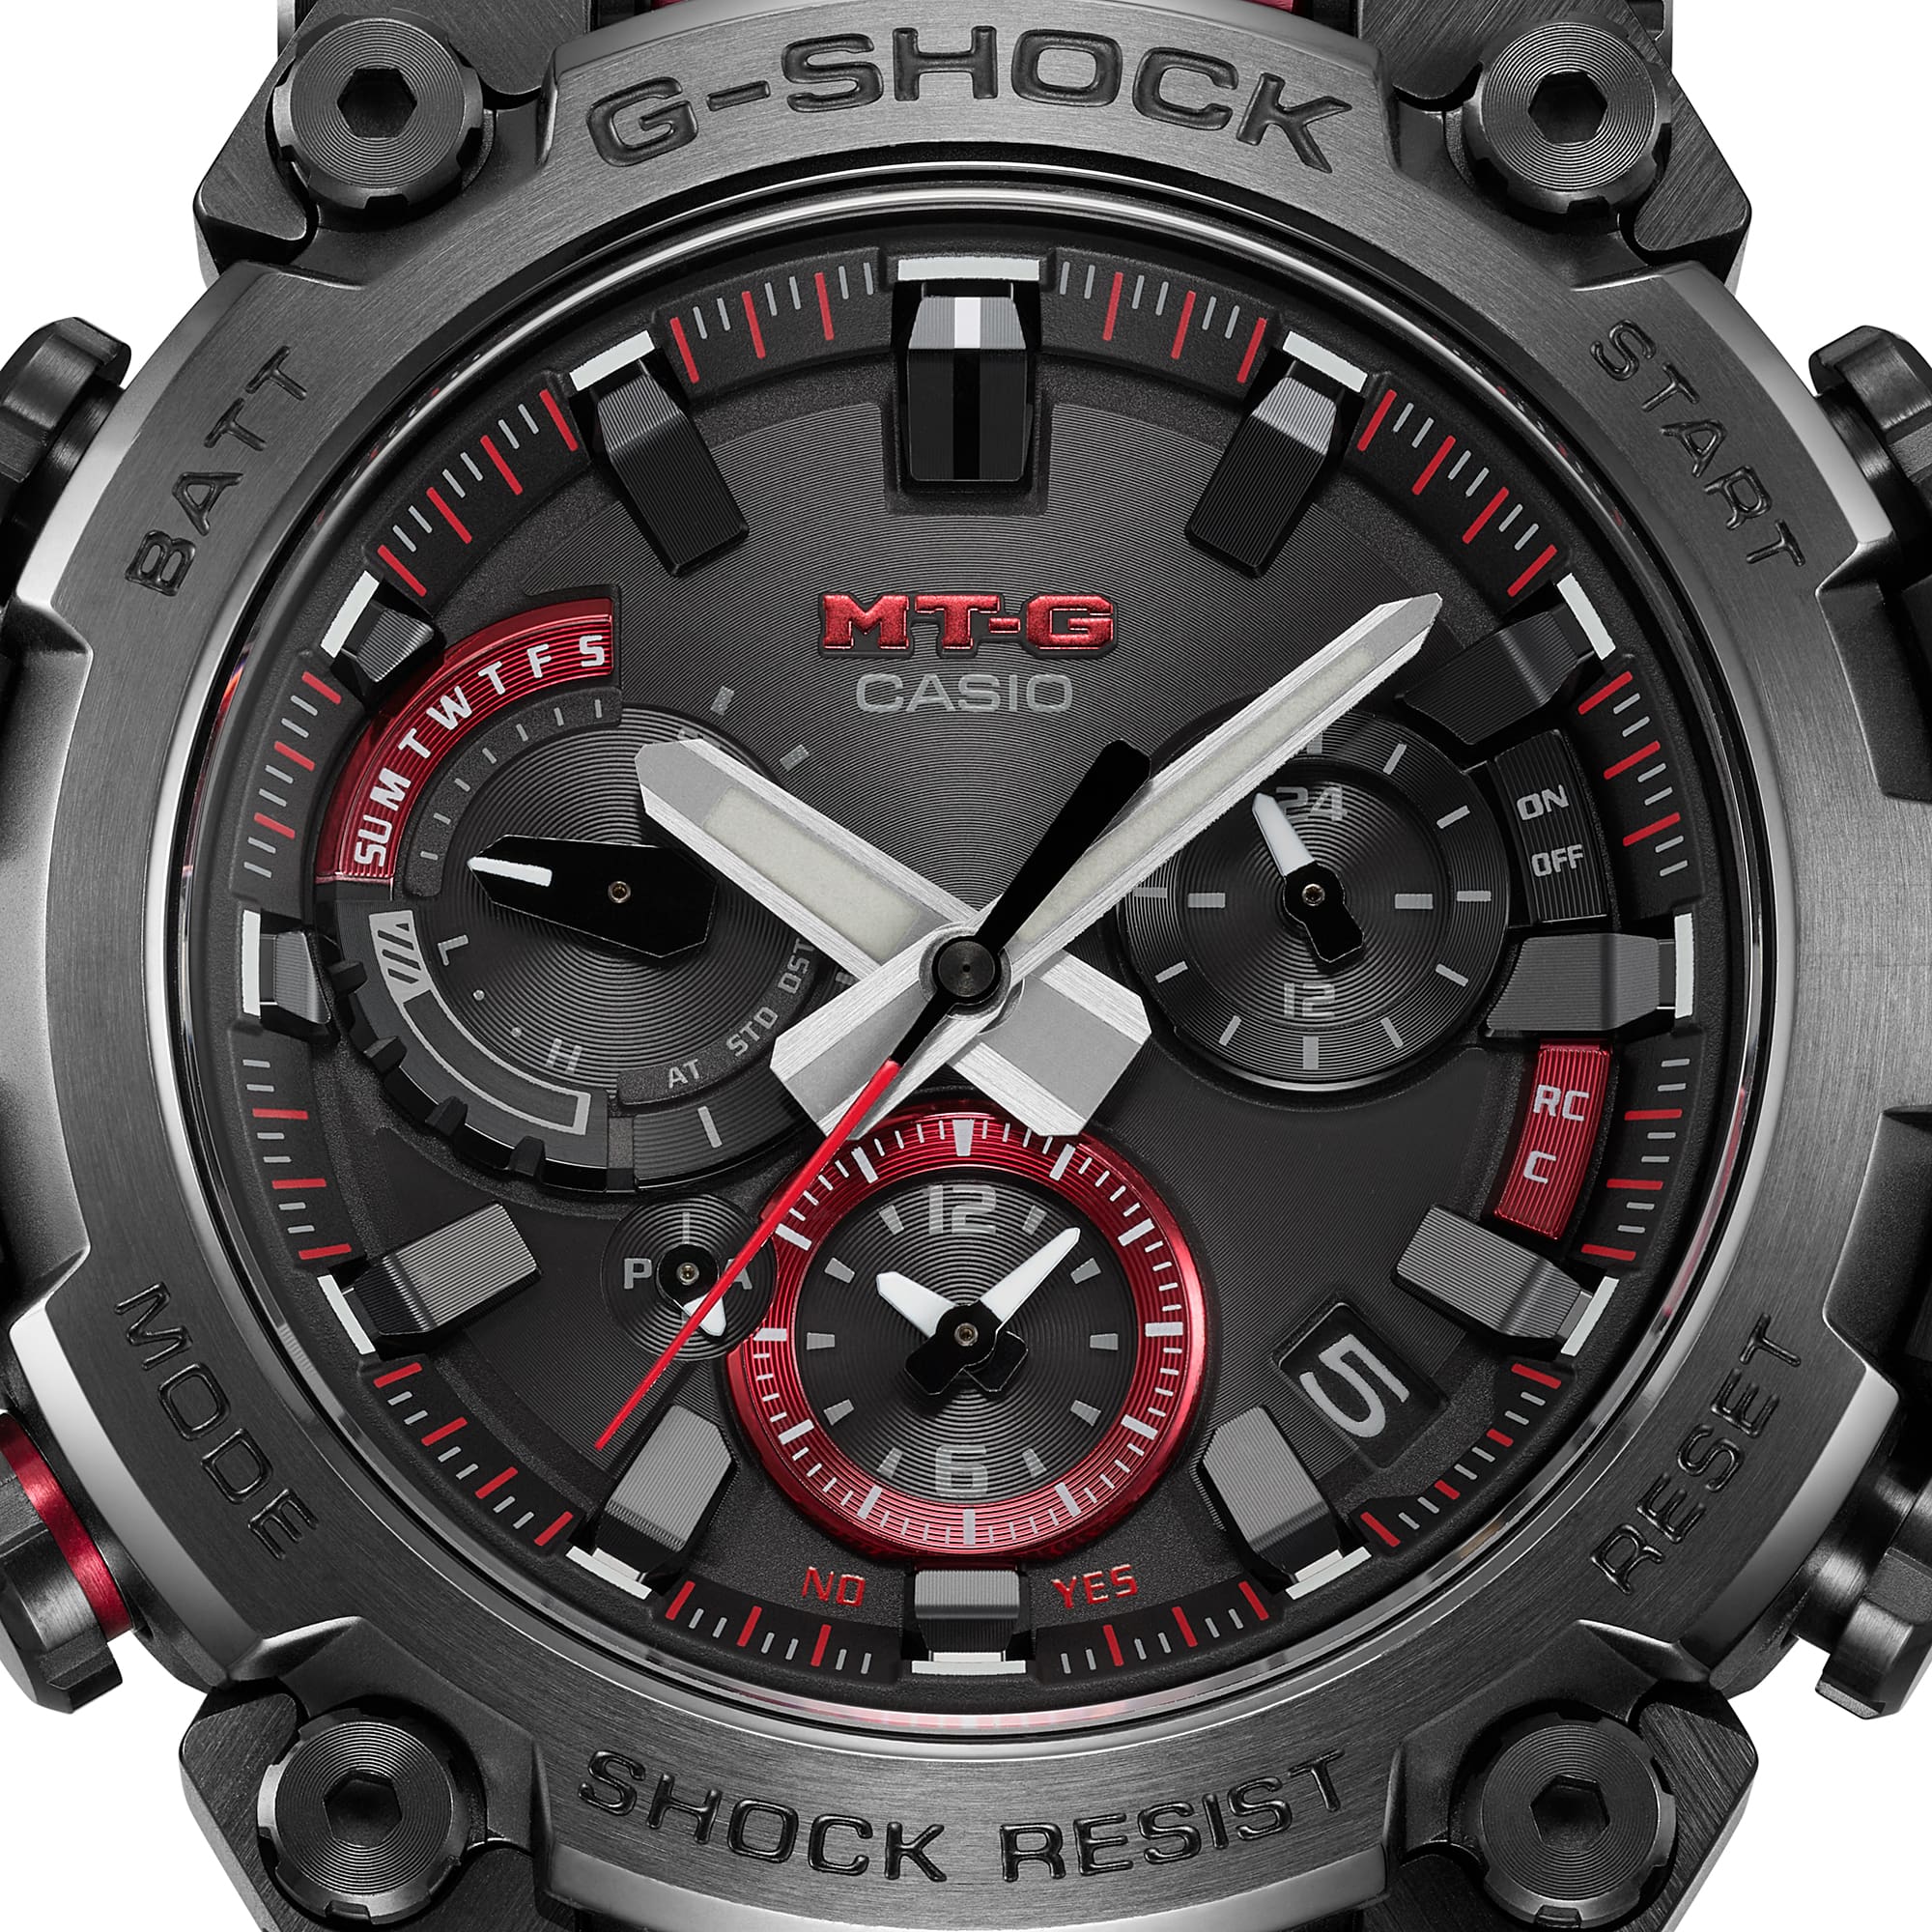 G-Shock MTGB3000 MT-G Black Red Men's Watch Quartz